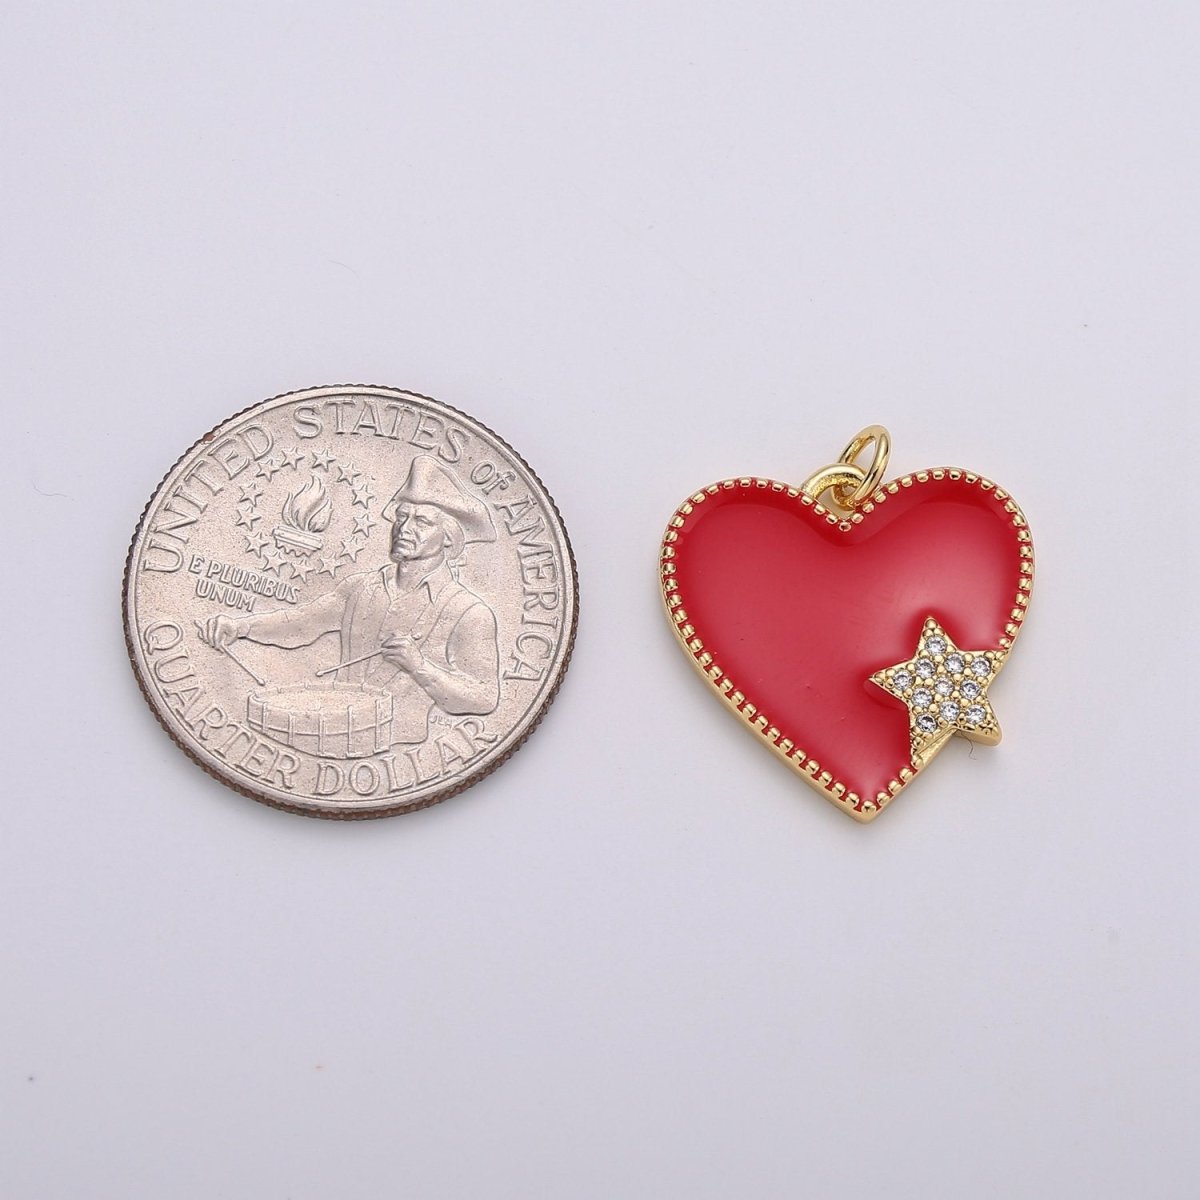 Pink Enamel Heart Charm Pendant, Red Enamel Heart Pendant, 14K gold Filled Star Heart Jewelry Making SupplyC-573 - DLUXCA